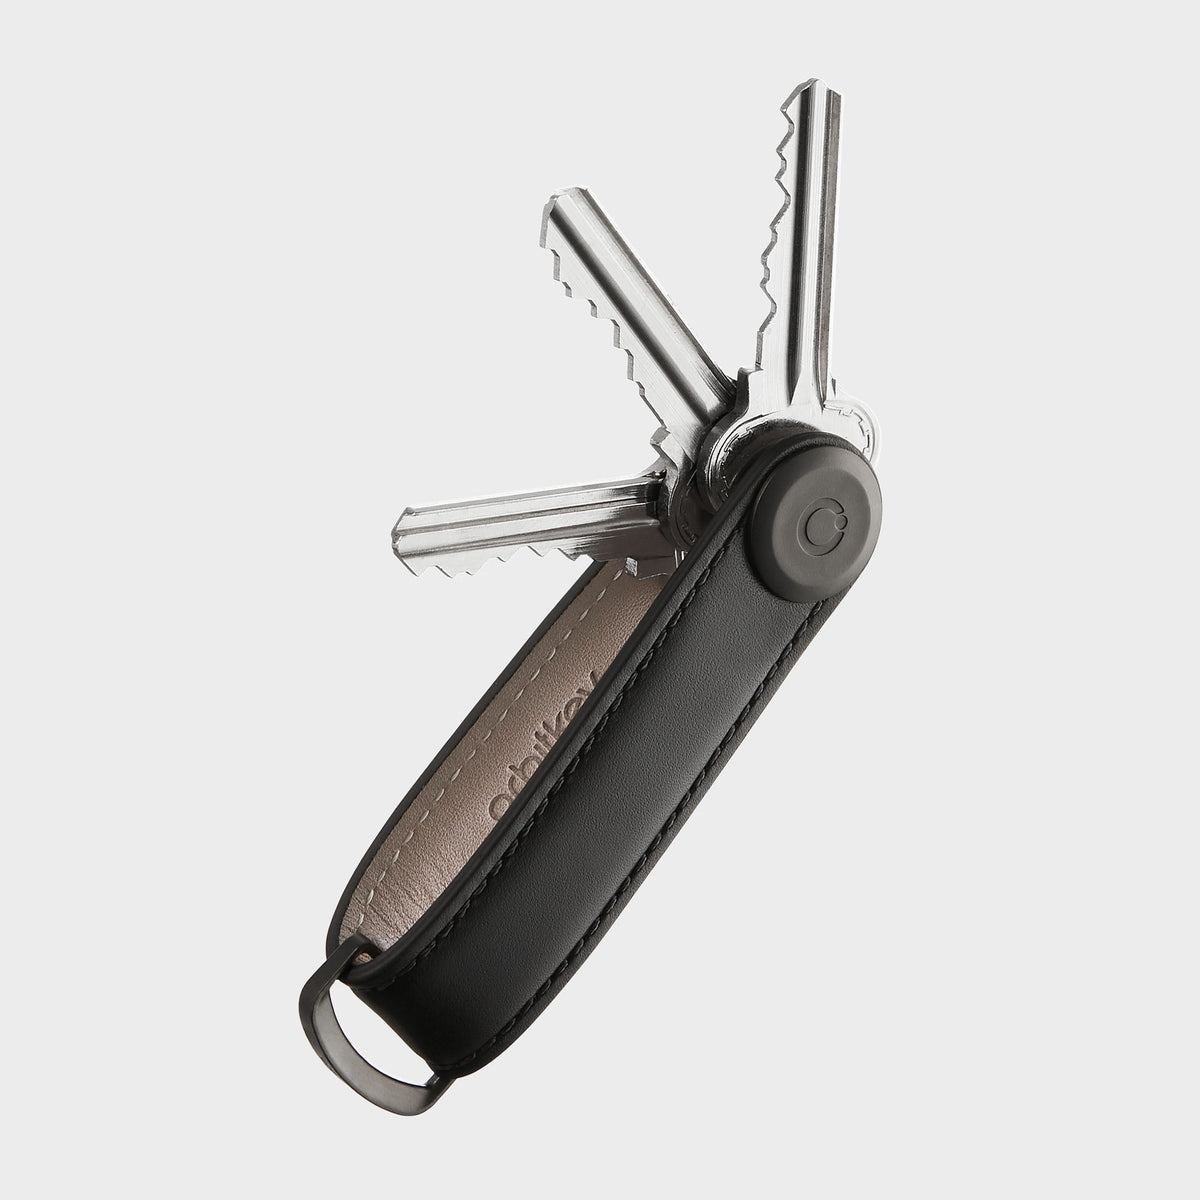 Personalized Multiple Key Ring Key Chain Holder Key Organizer 